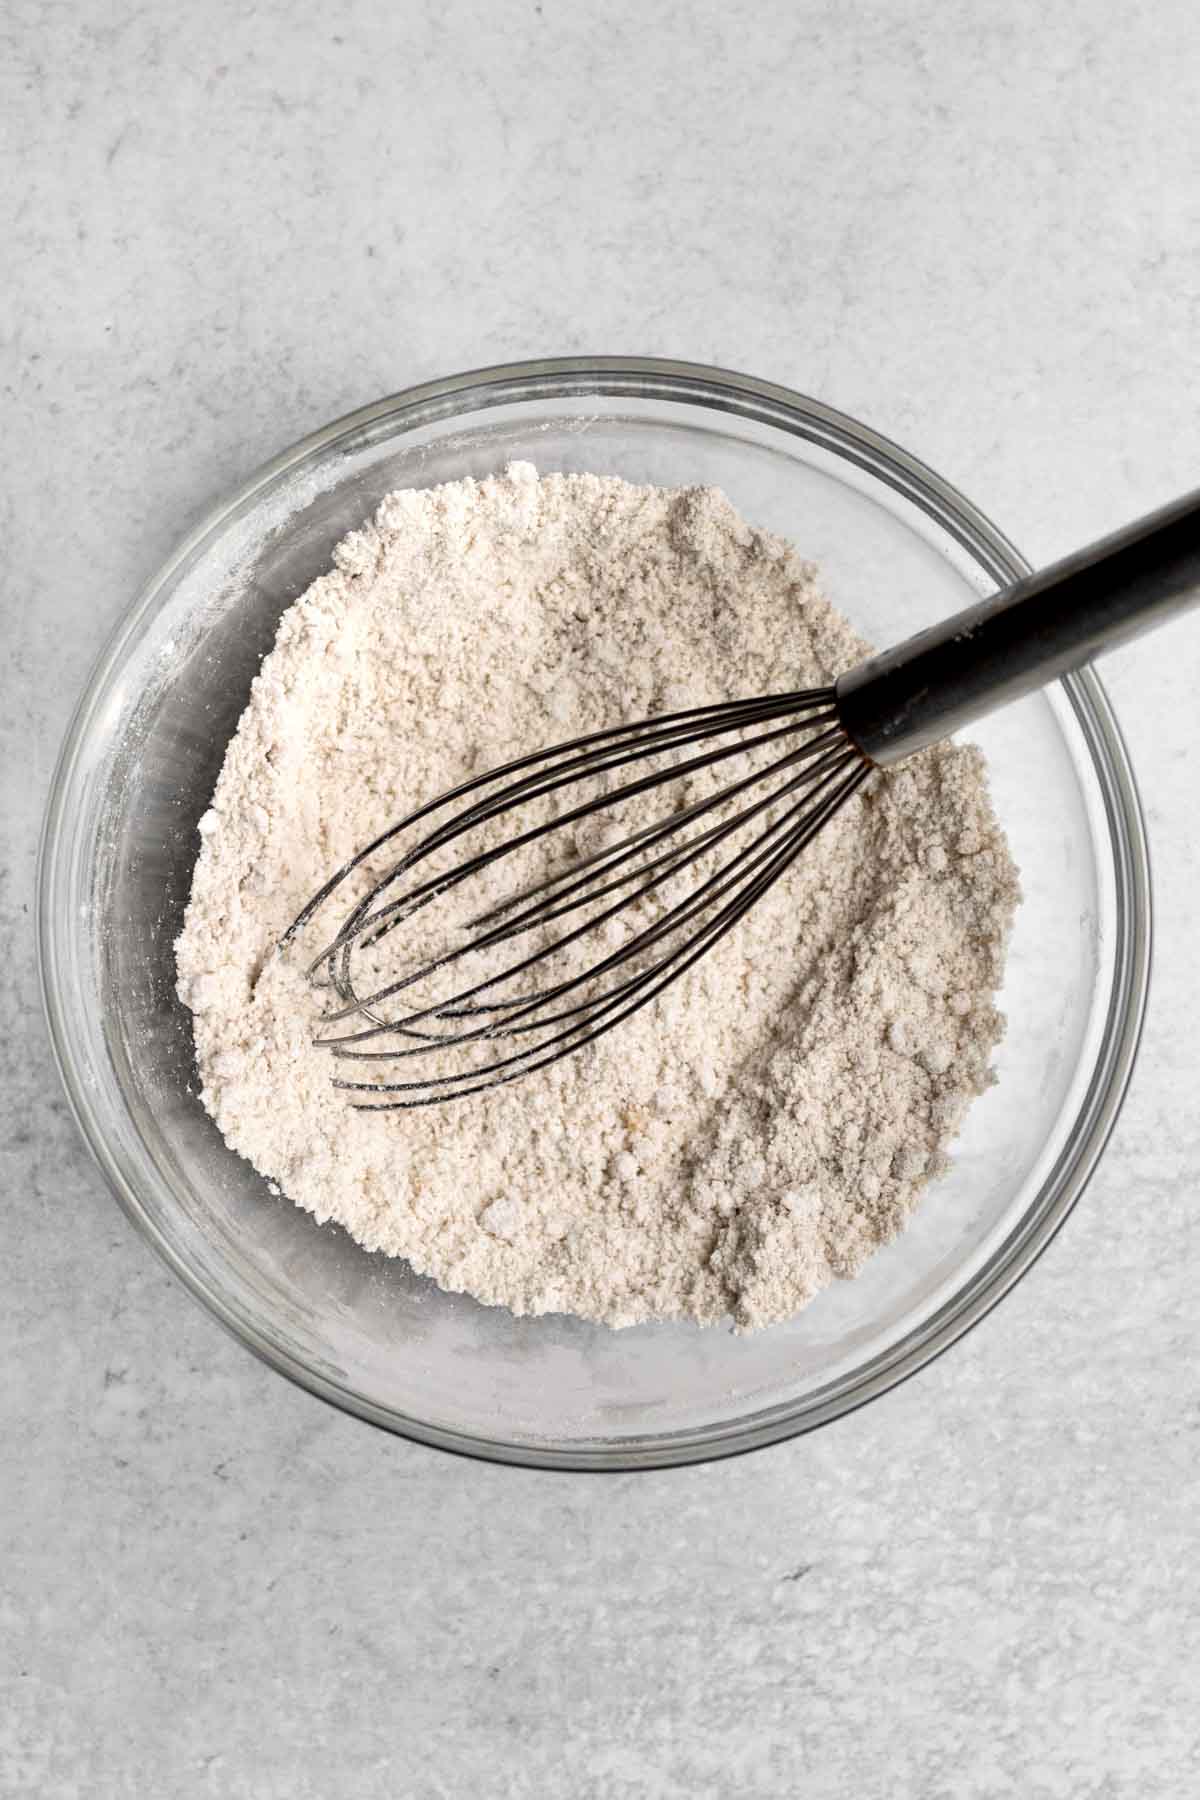 Gluten free flour, brown sugar, baking powder and salt in a bowl mixed.